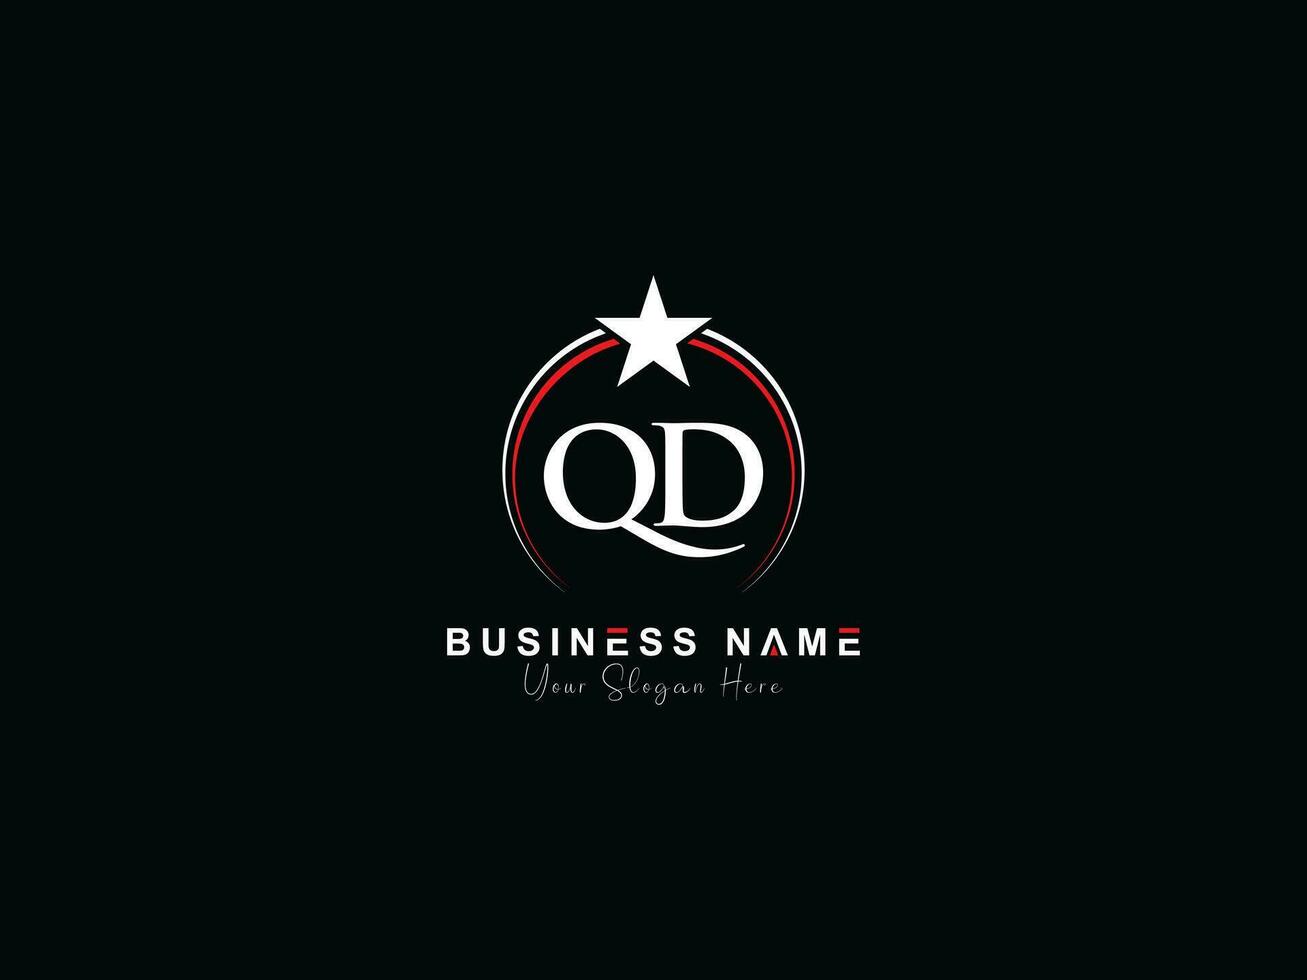 Premium Royal Star Qd Logo Vector, Unique Circle QD Logo Letter Vector Image